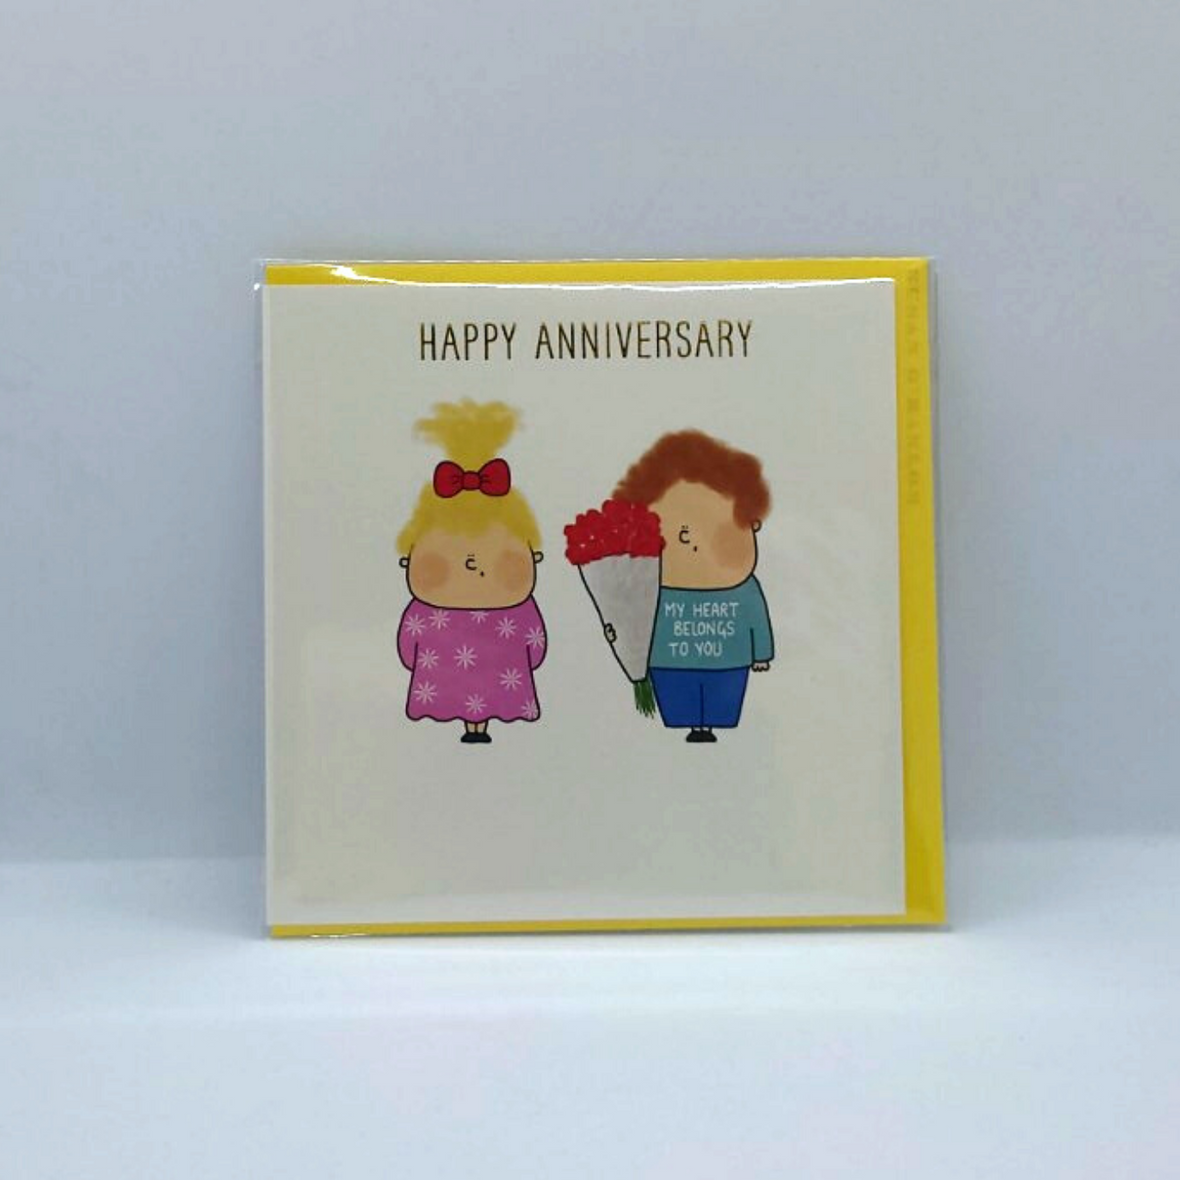 Happy Anniversary - My Heart Belongs To You | Susan O'Hanlon Card